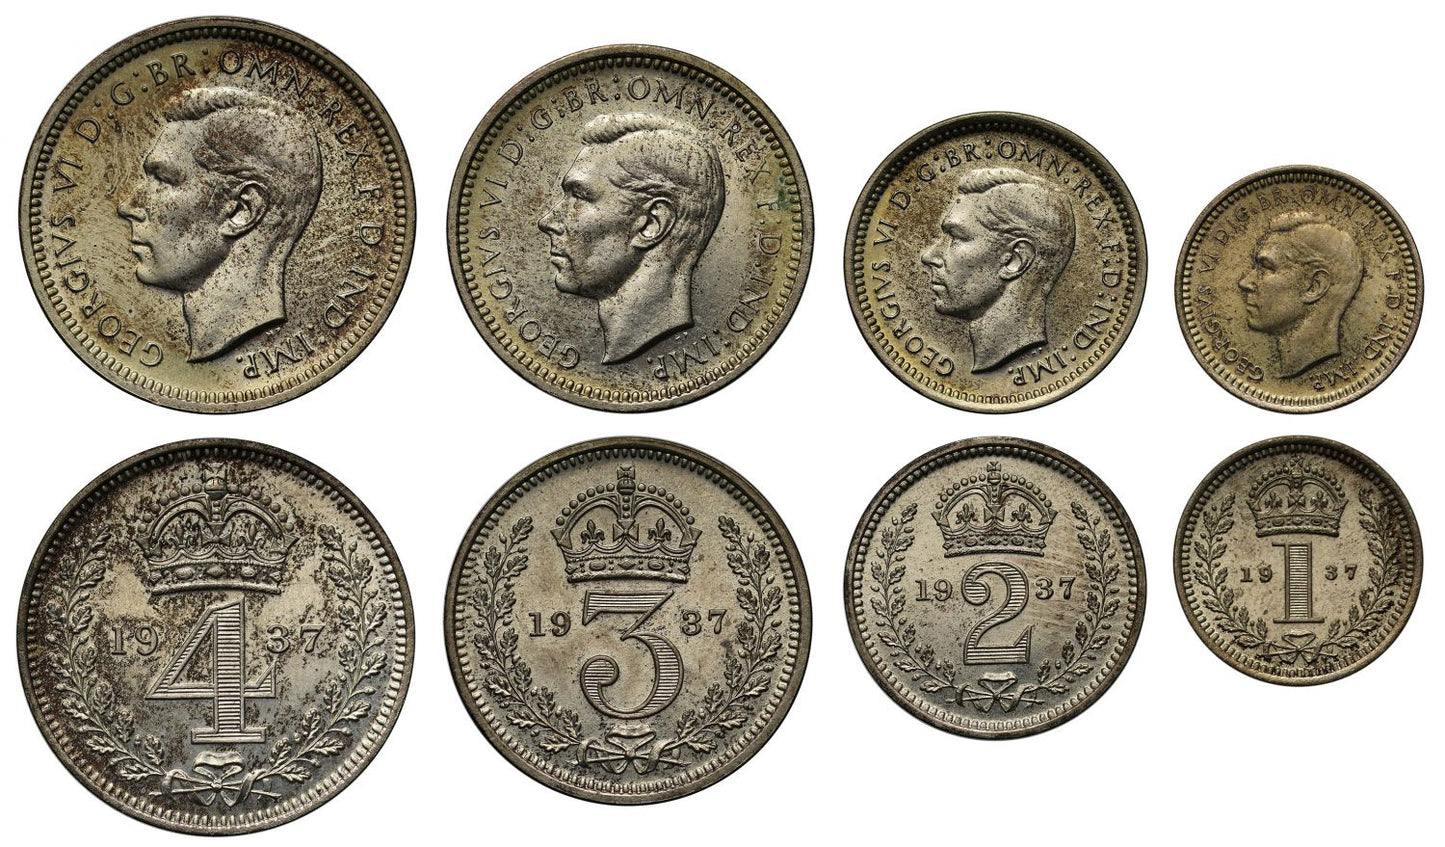 George VI 1937 Coronation silver and bronze proof set